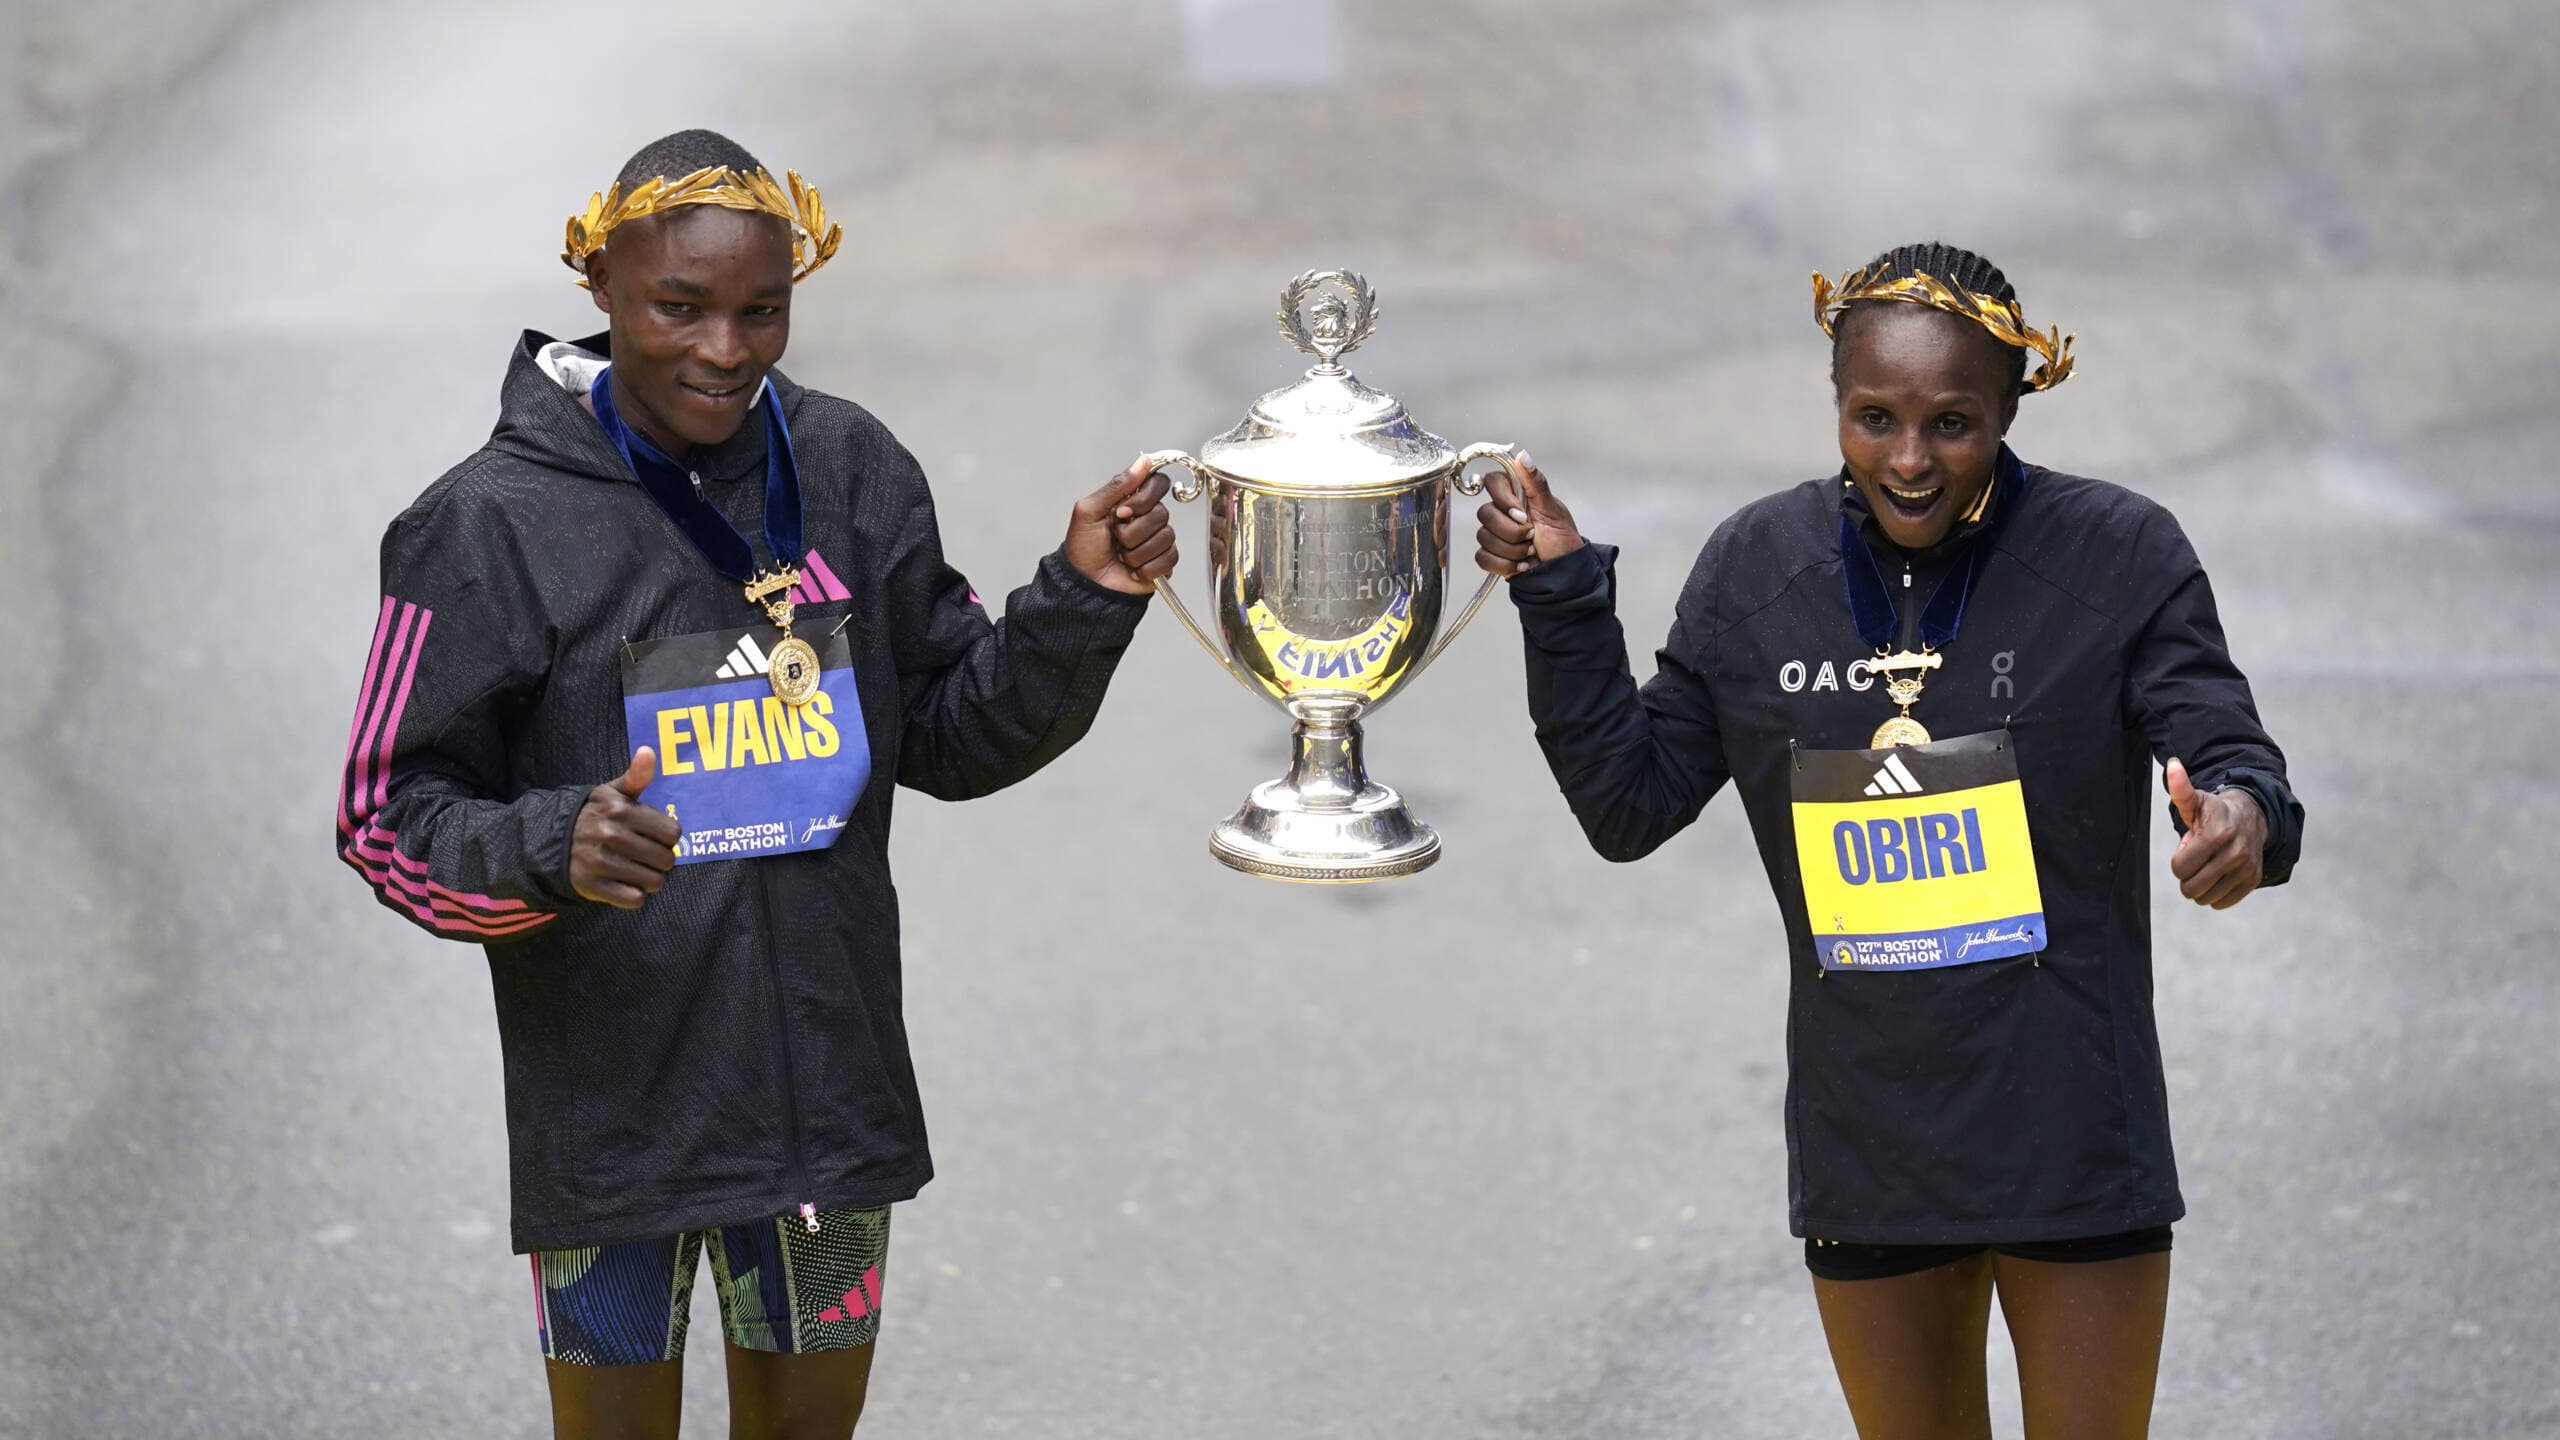 Here's a recap of what happened during the 127th Boston Marathon WBUR